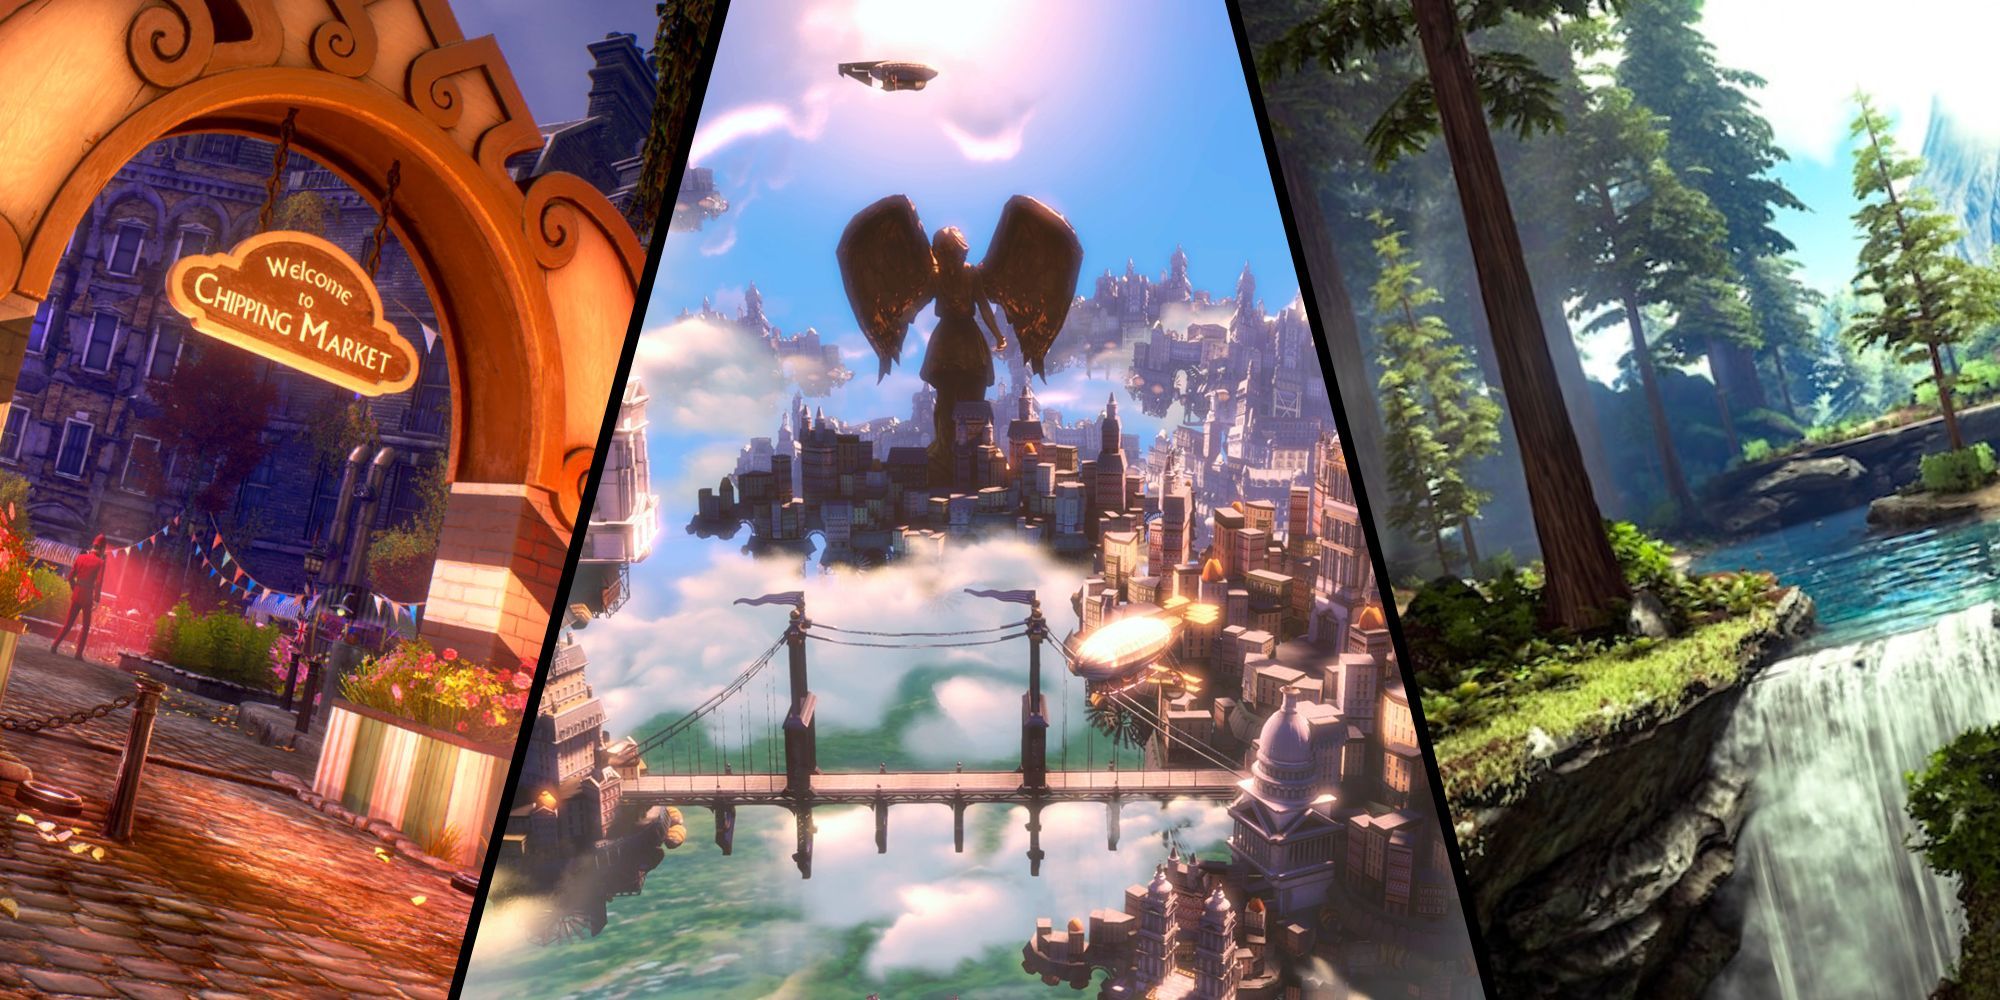 We Happy Few, BioShock Infinite, Ark Survival Evolved in Split Image Collage